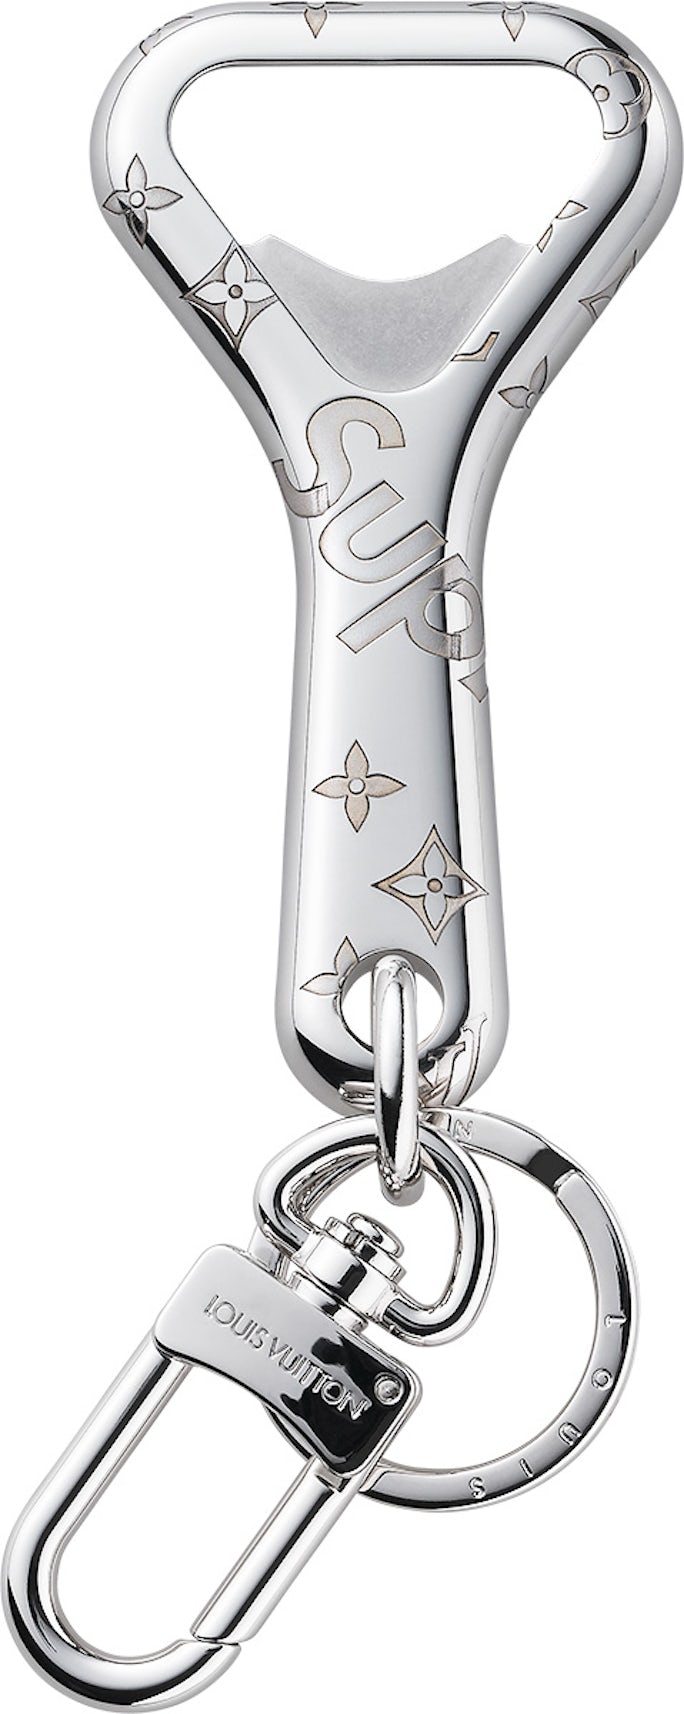 Louis Vuitton Supreme Logo Brown Leather Key Ring / Keychain